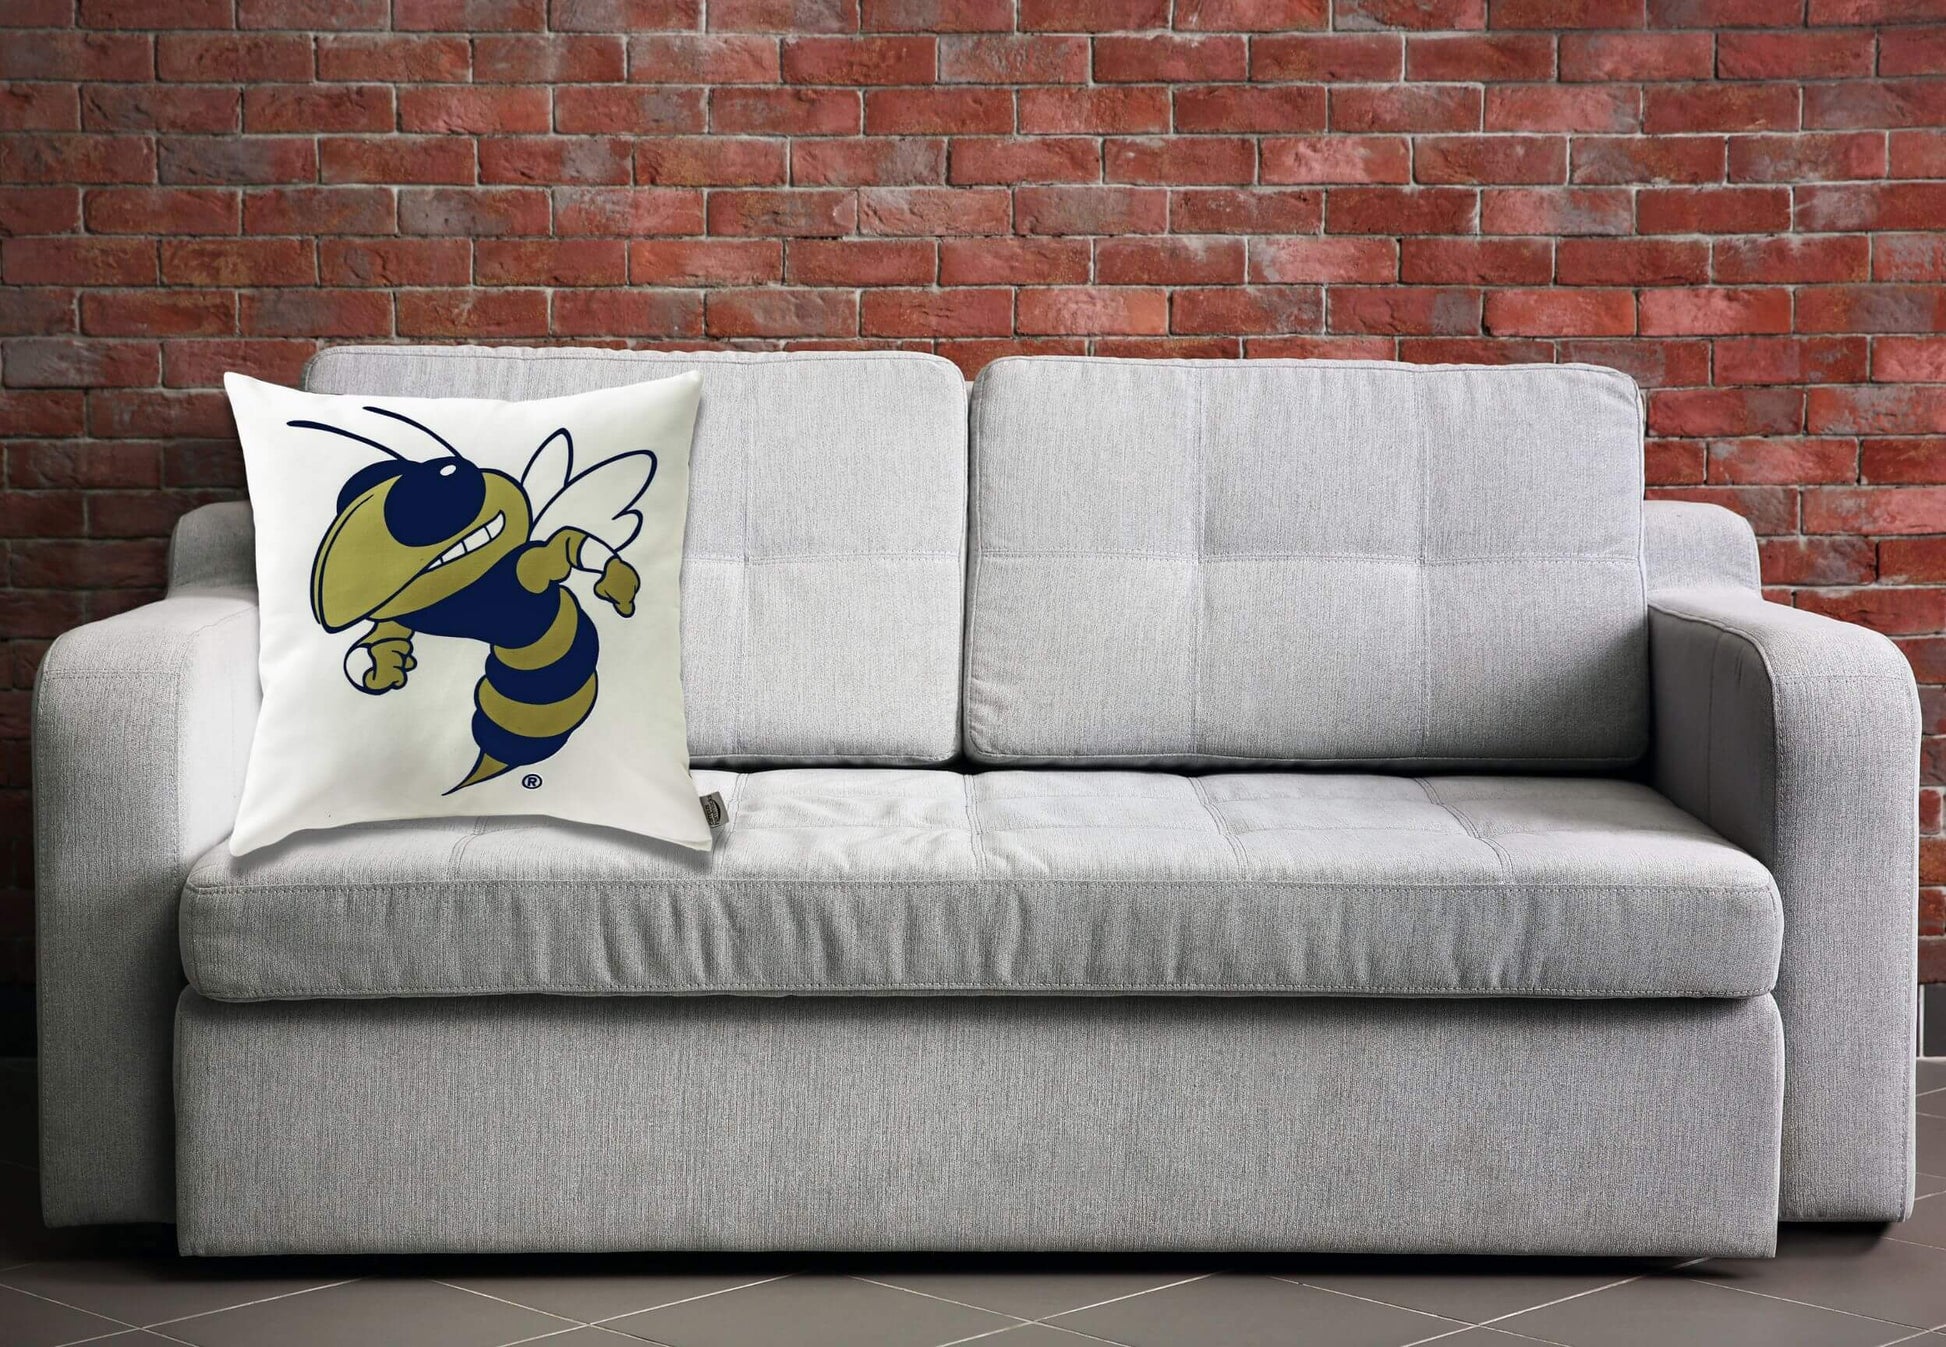 georgia tech mascot pillow in sofa